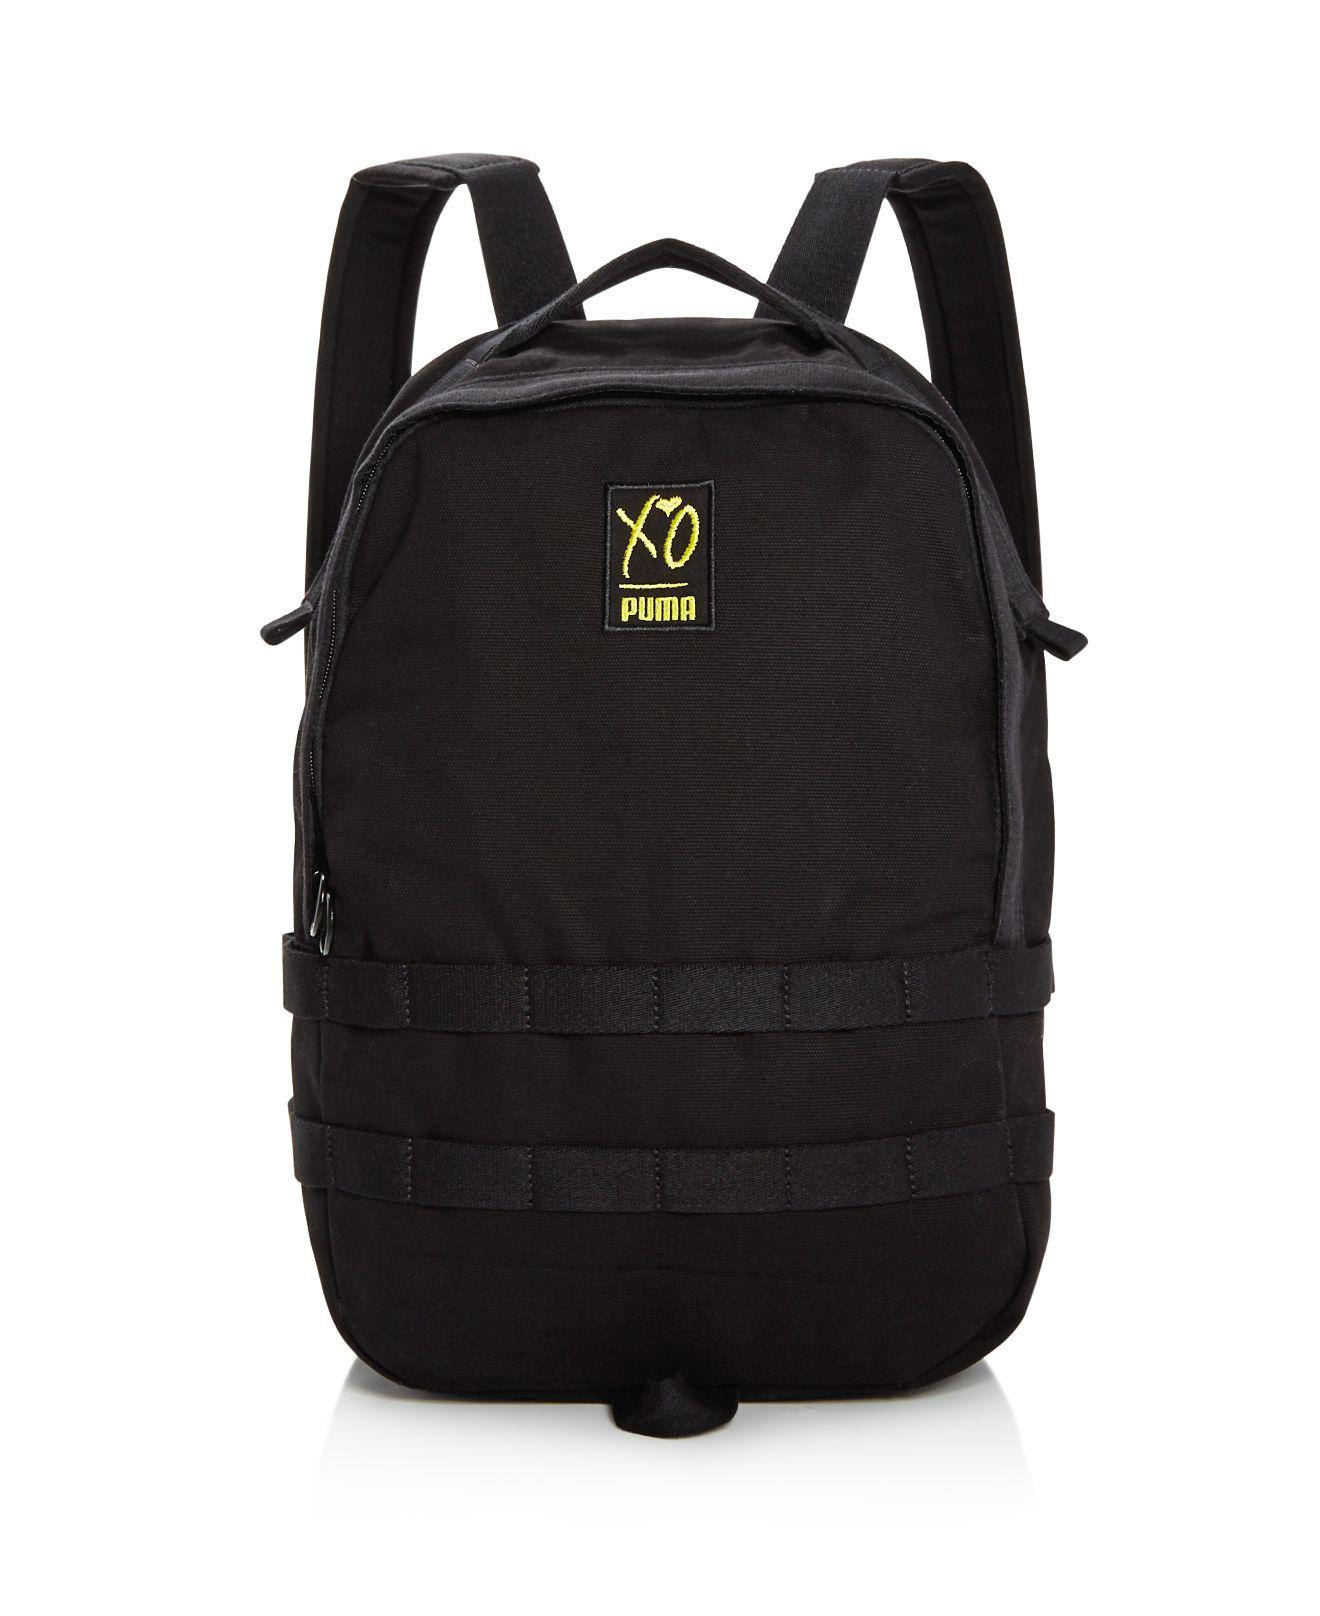 PUMA X Xo The Weeknd Backpack Black for | Lyst